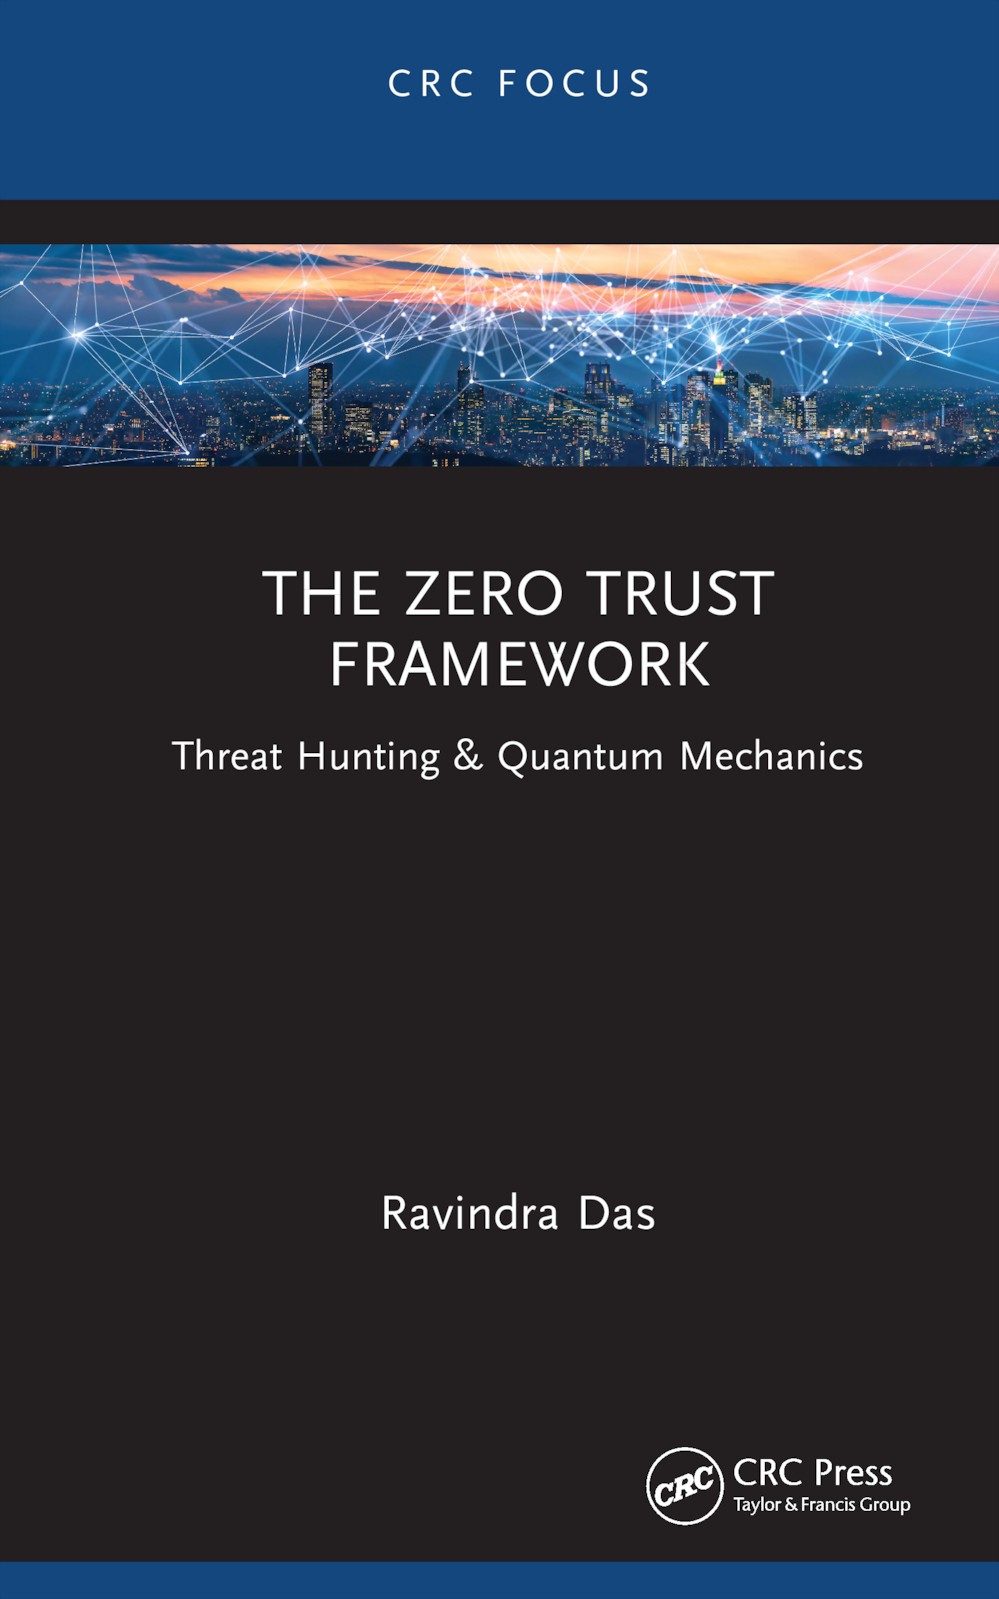 The Zero Trust Framework Threat Hunting & Quantum Mechanics